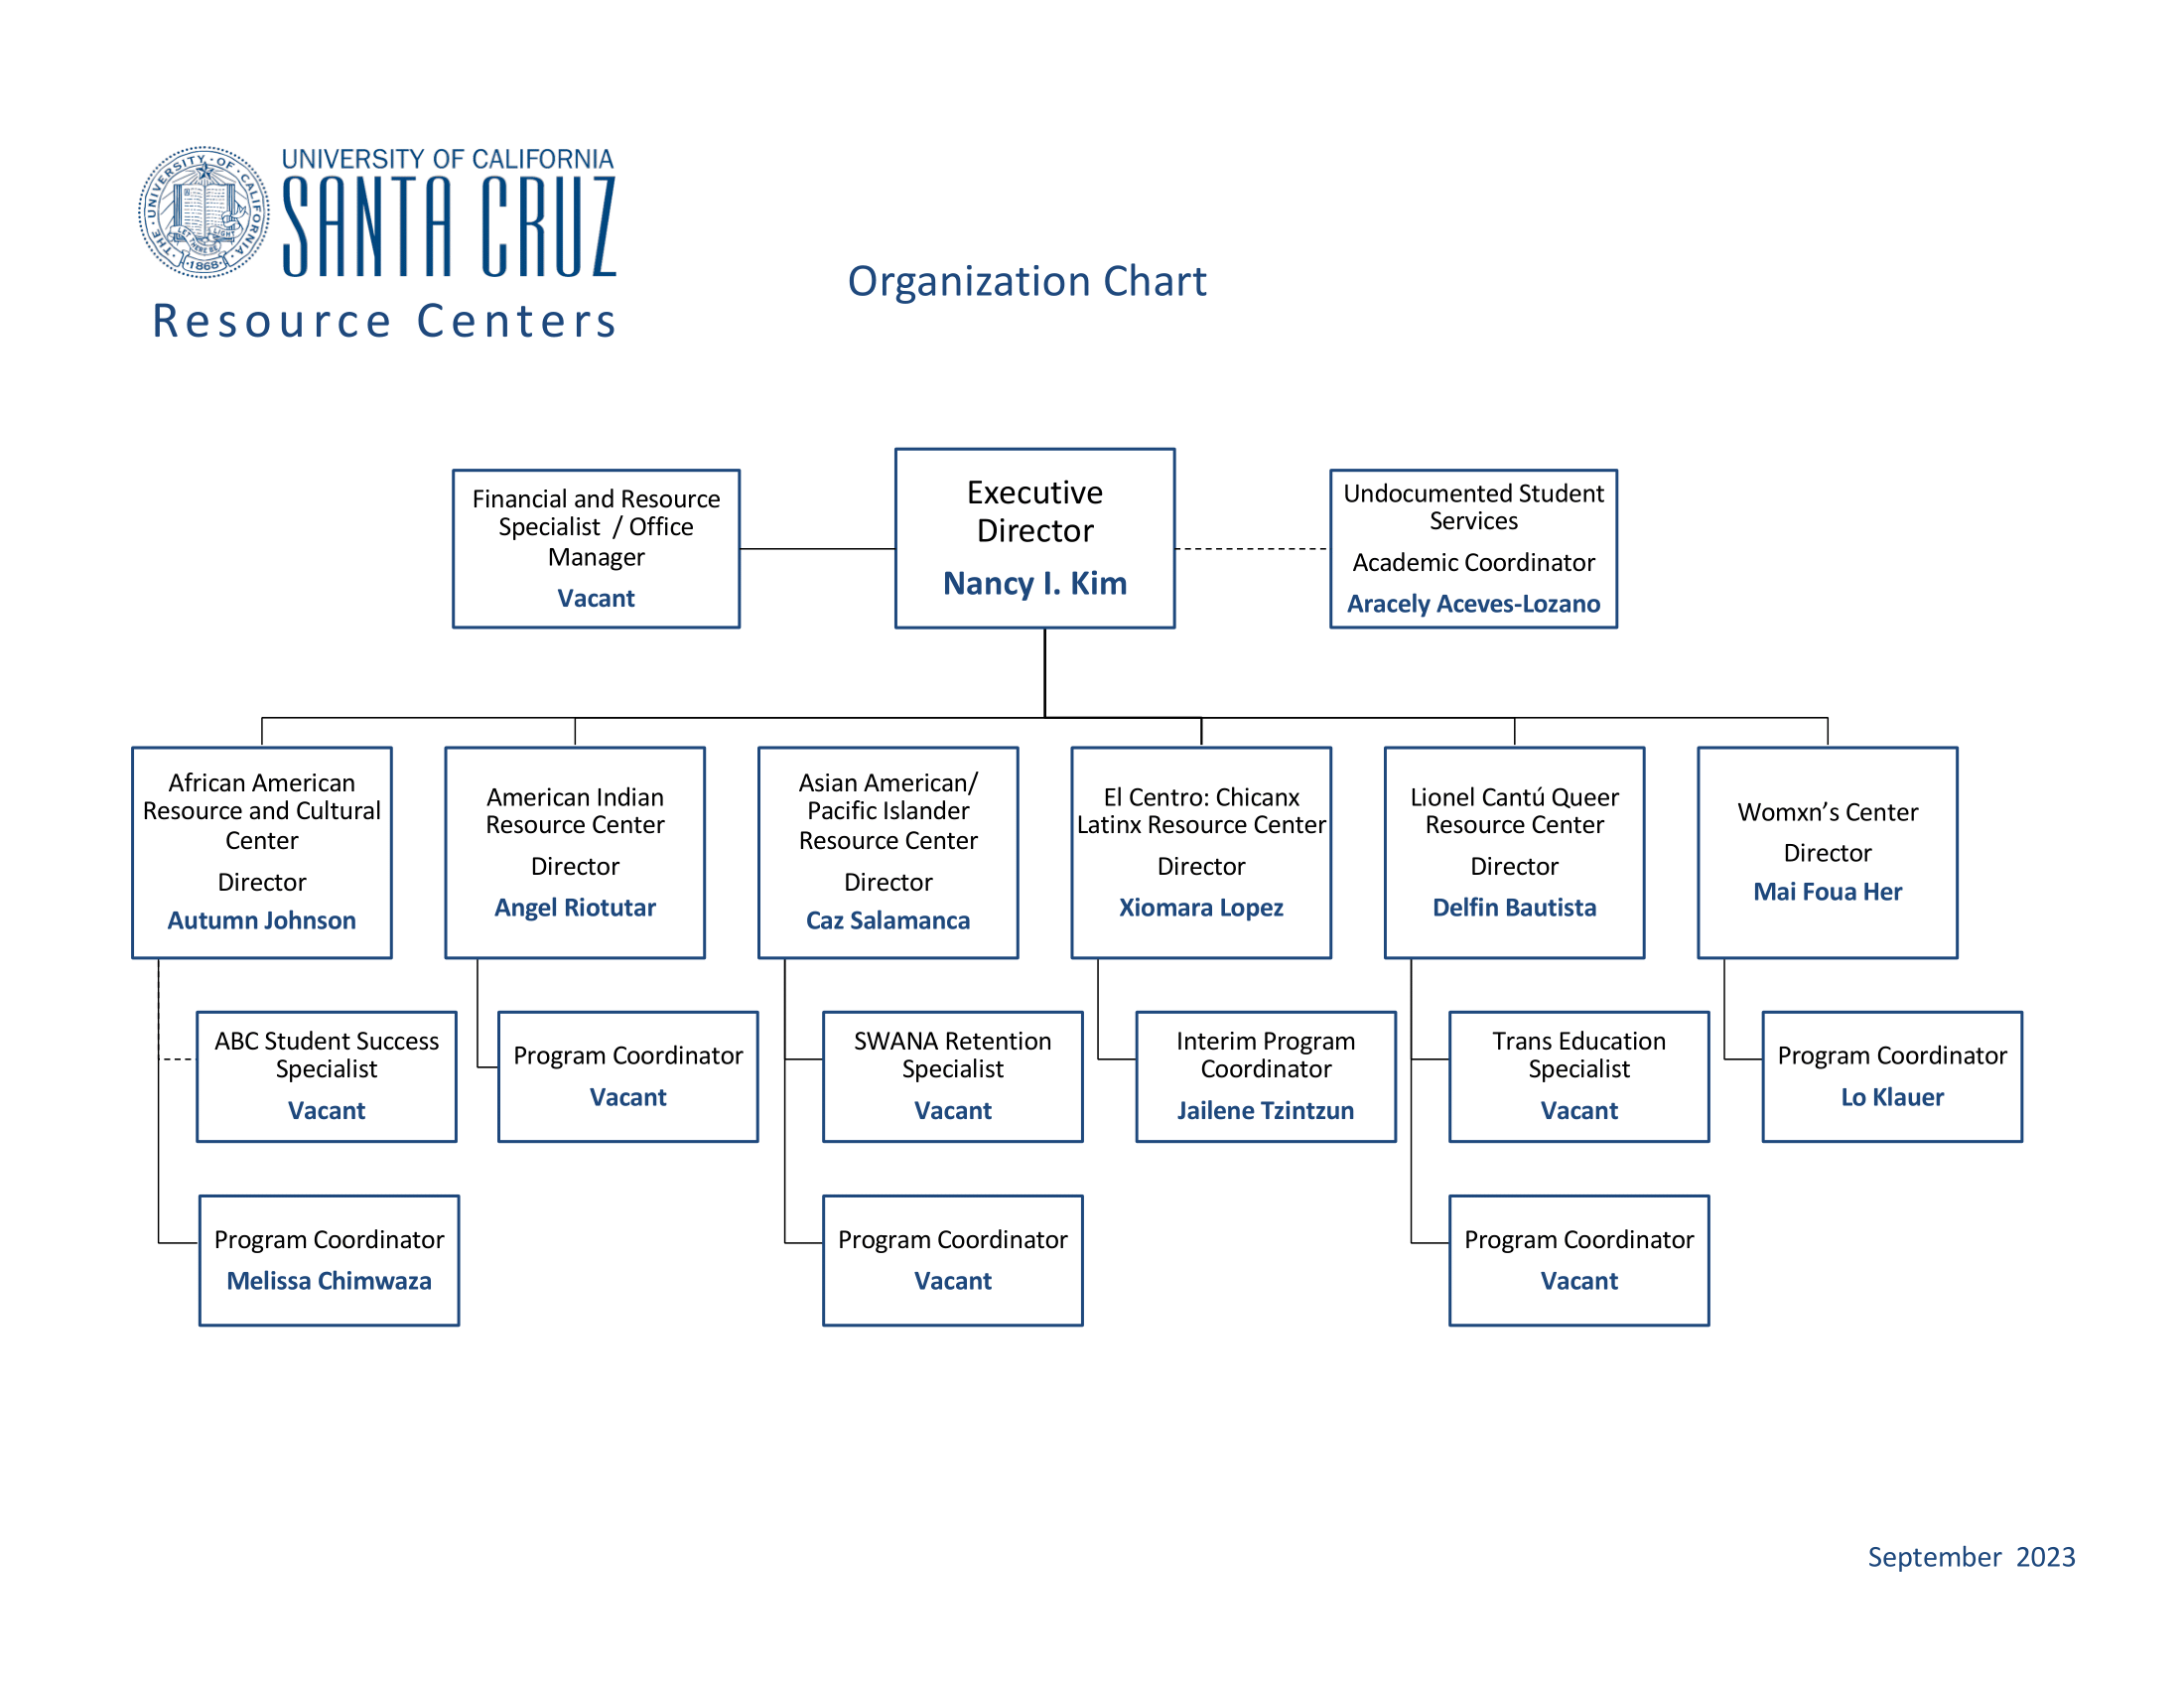 rc-organization-chart-2023-sept-1.png